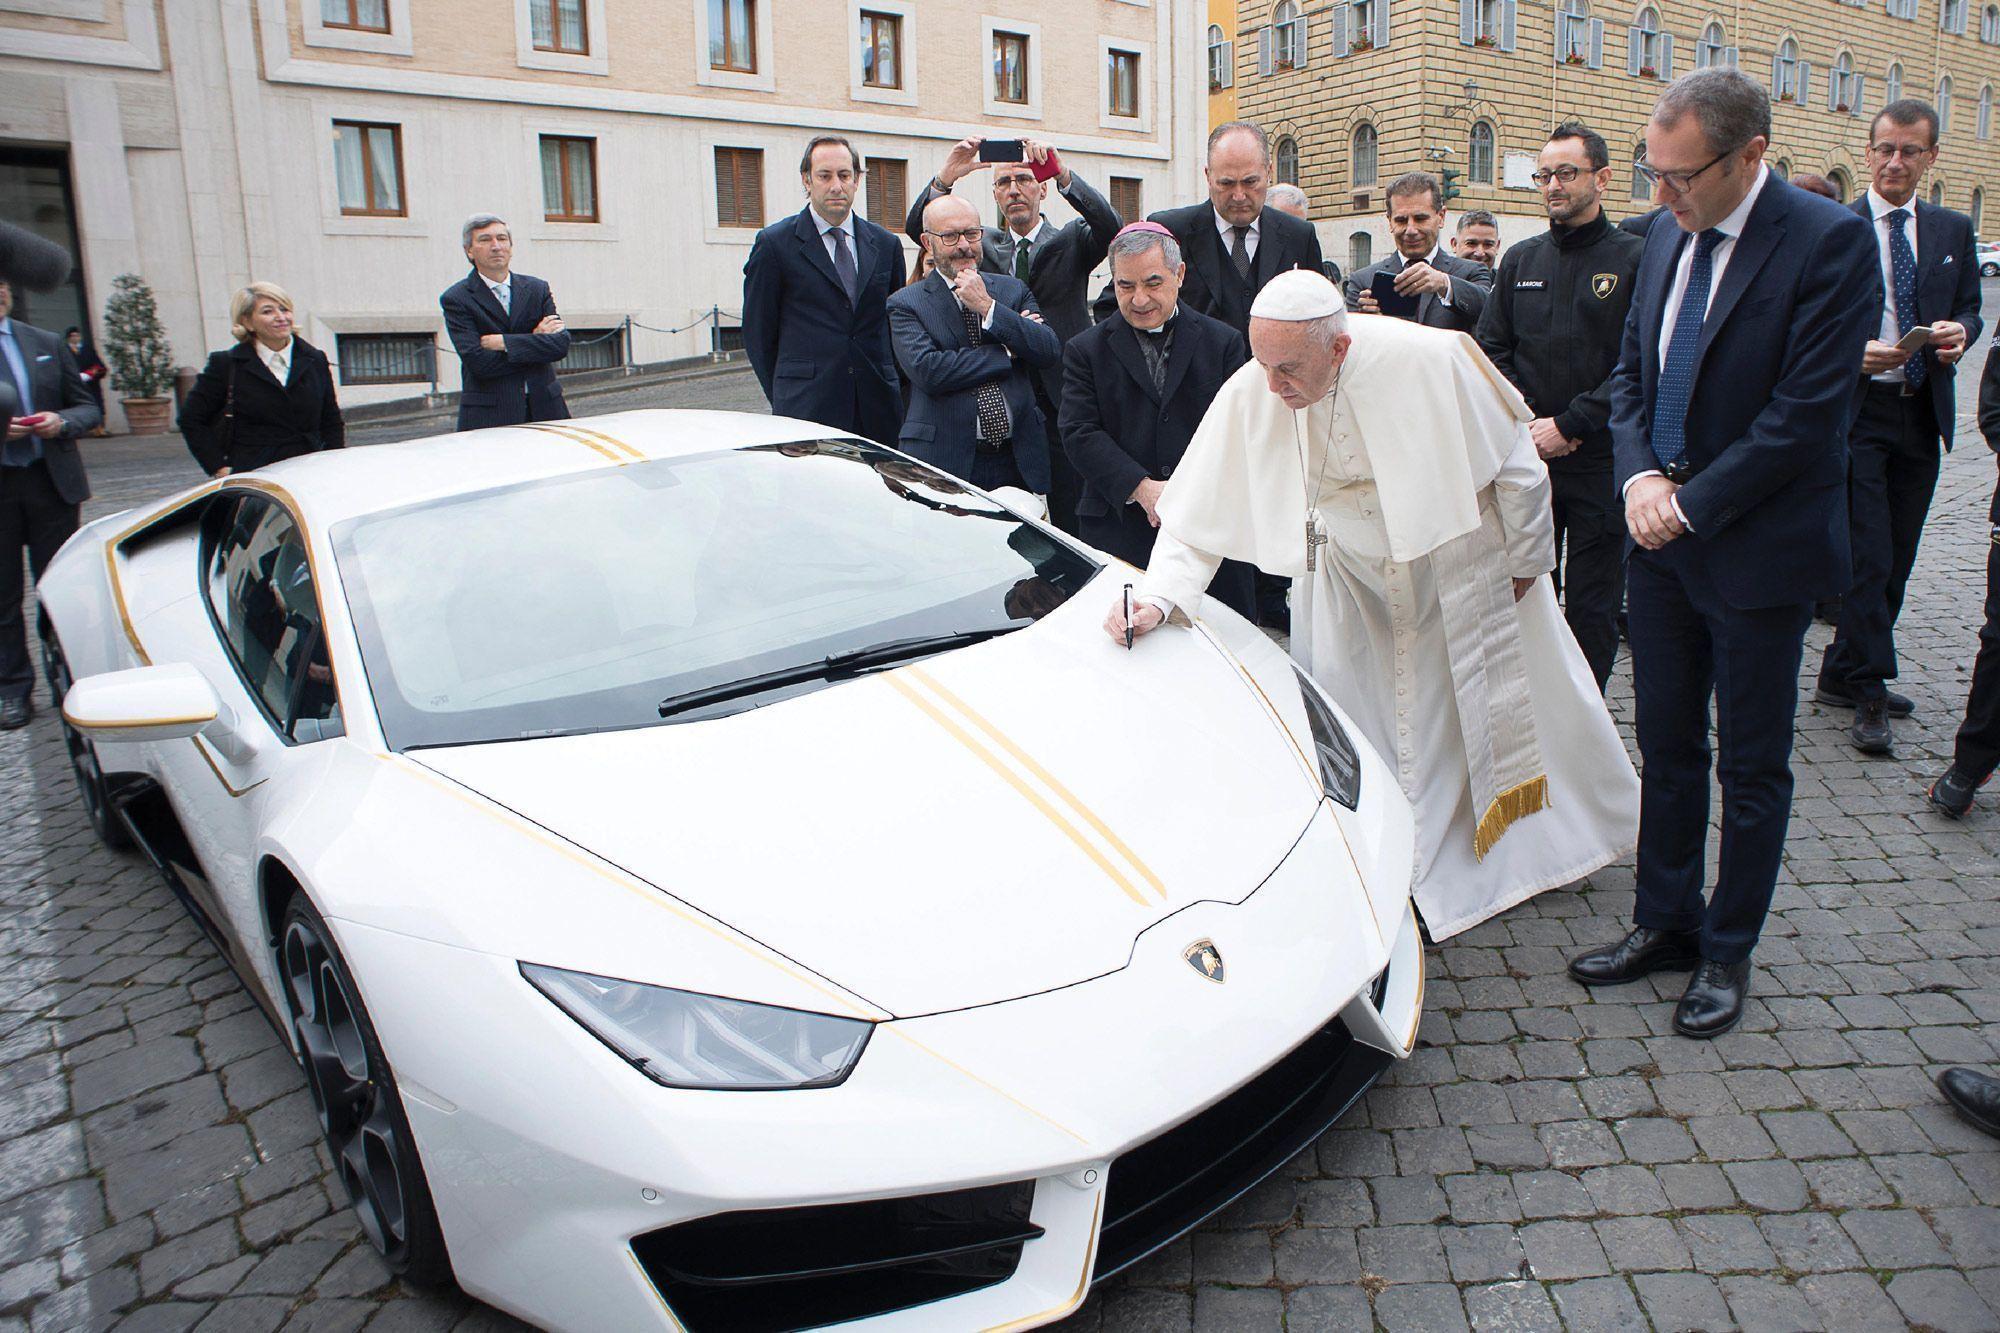 Se alquila Lamborghini del Papa